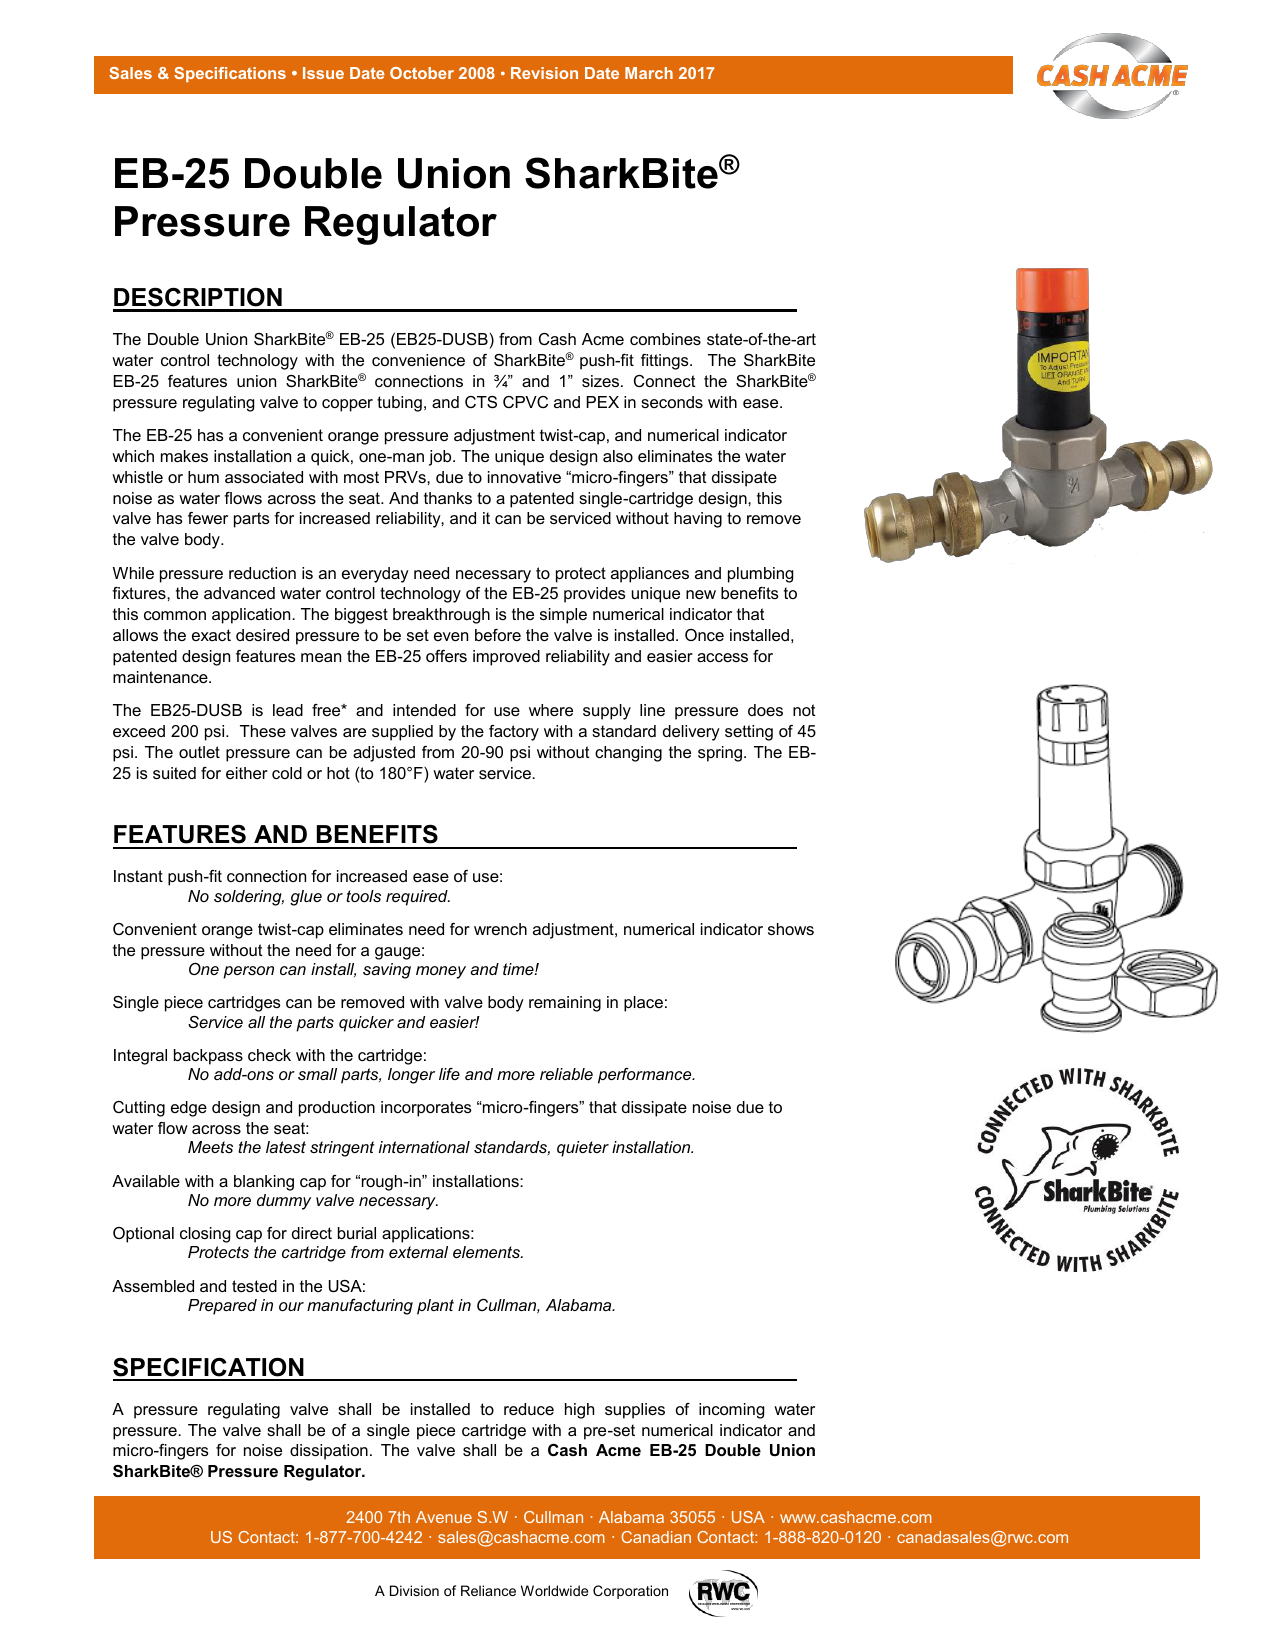 EB25-DUSB Pressure Regulator Pack of 3 pcs Cash Acme 23956-0045 